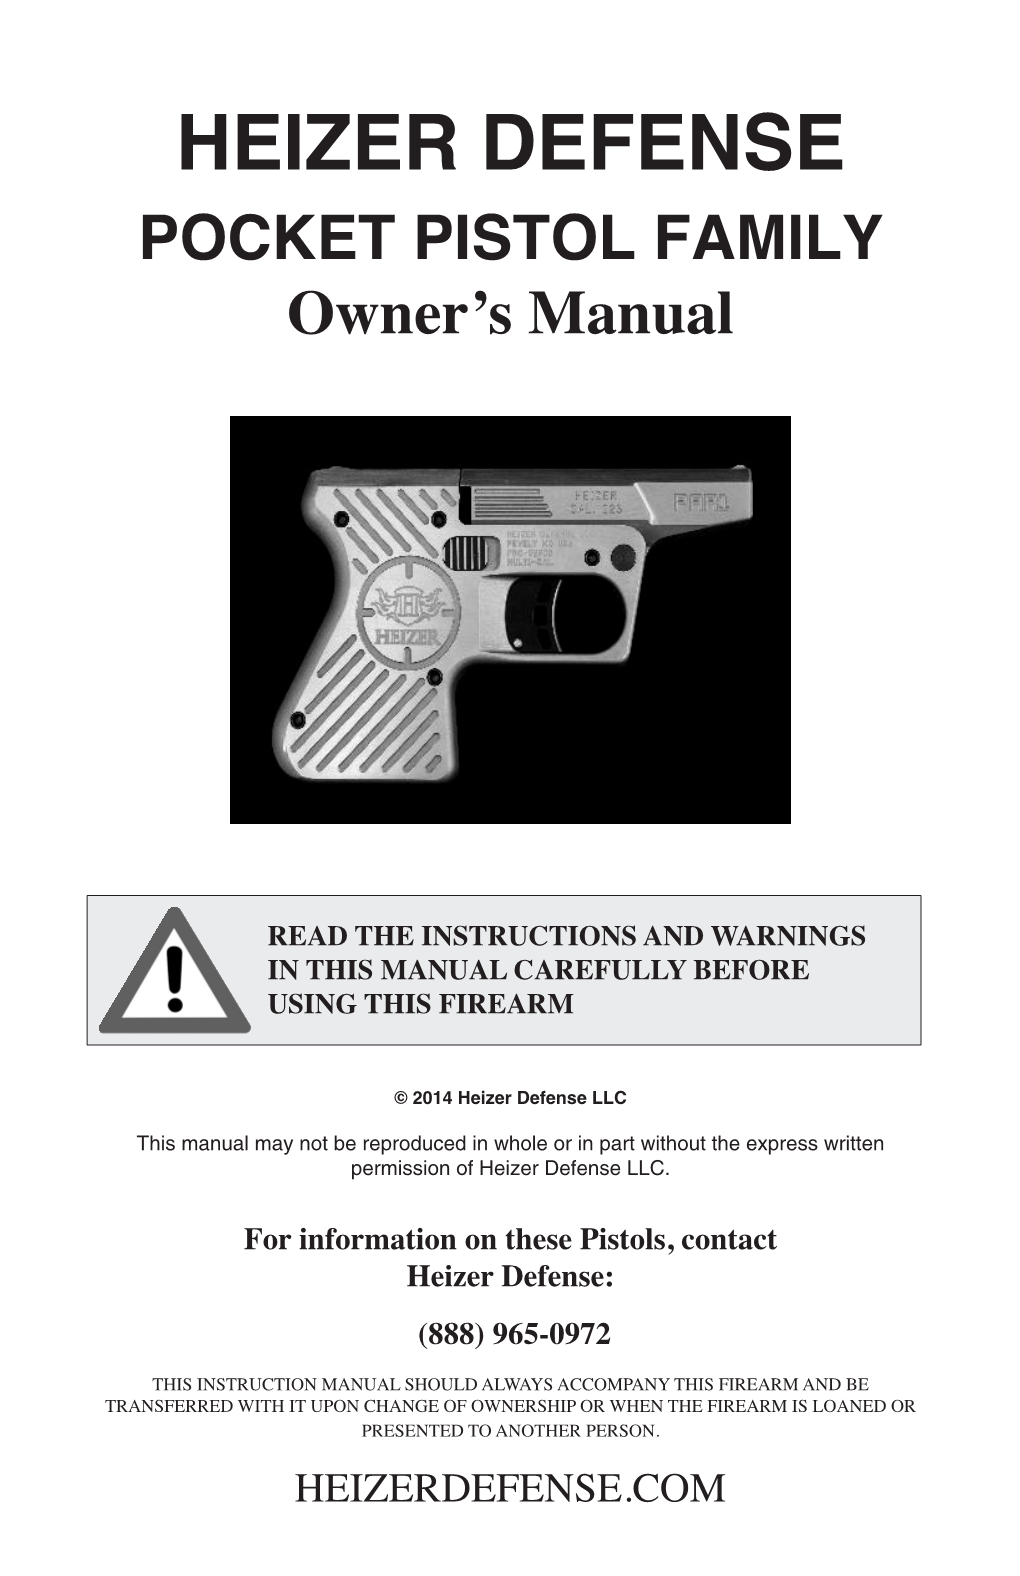 HEIZER DEFENSE POCKET PISTOL FAMILY Owner’S Manual